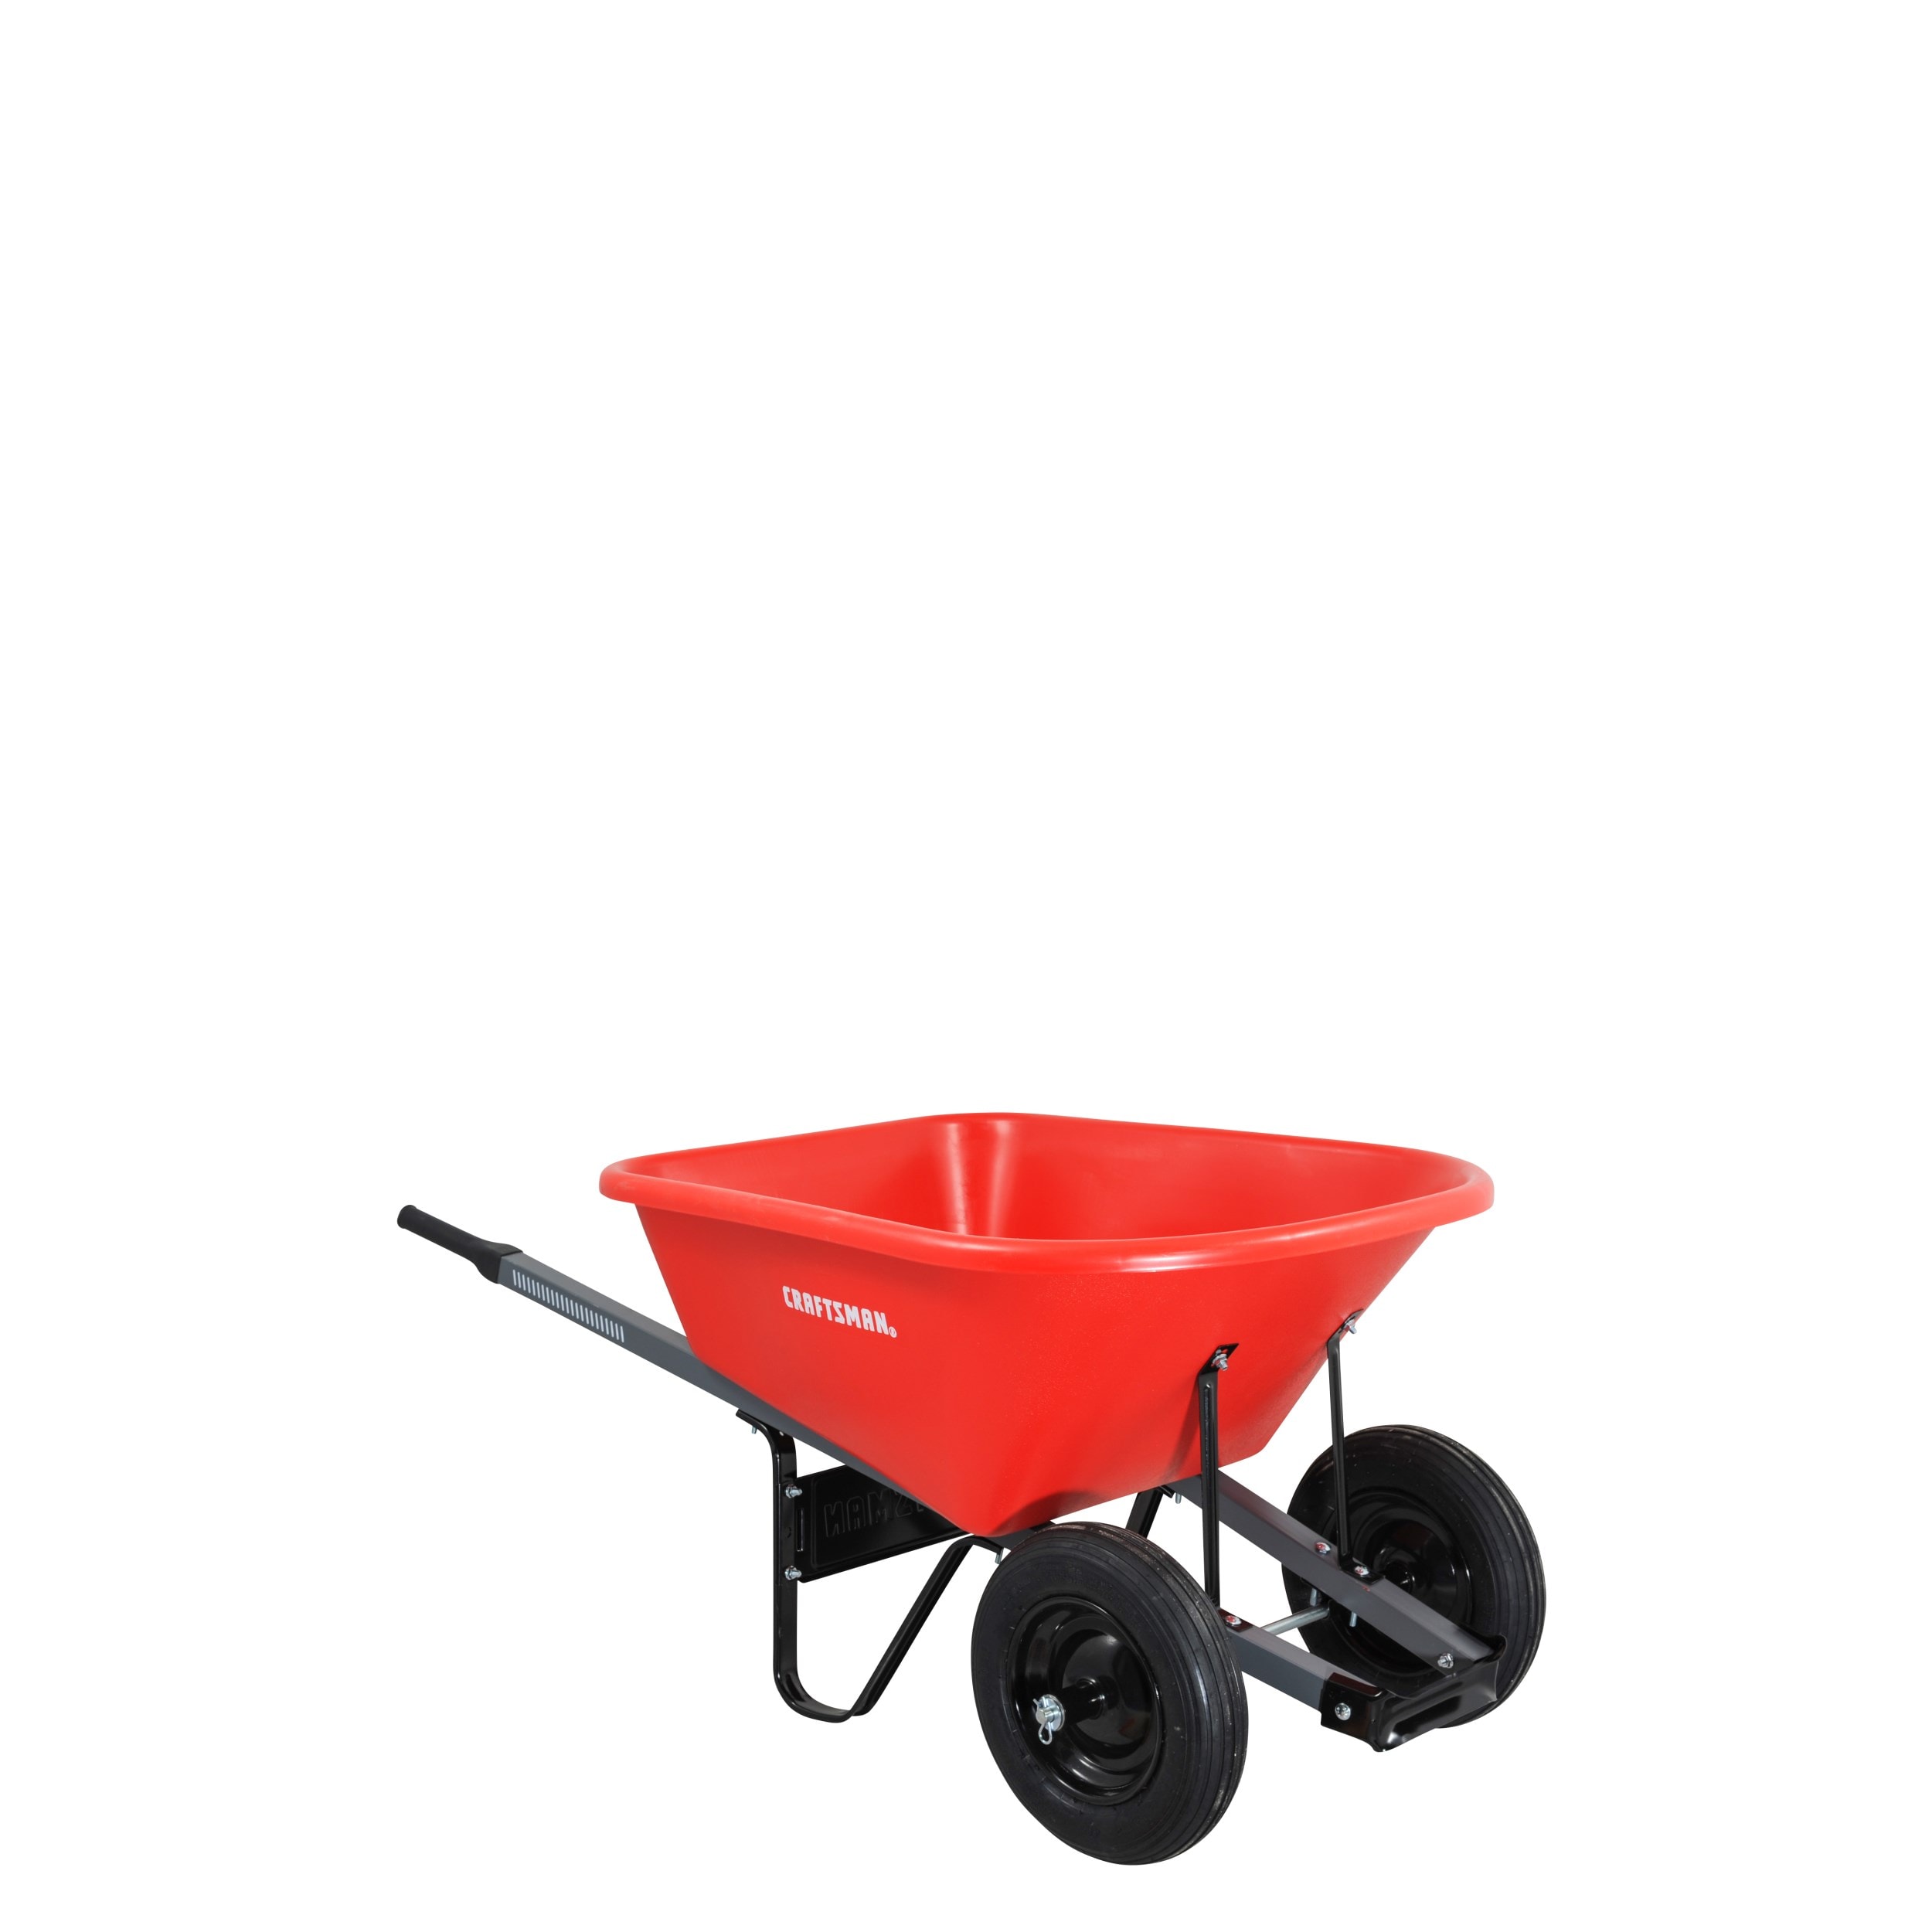 A.M Leonard Steel Tray Wheelbarrow with Pneumatic Tire 6 Cubic Feet Red 